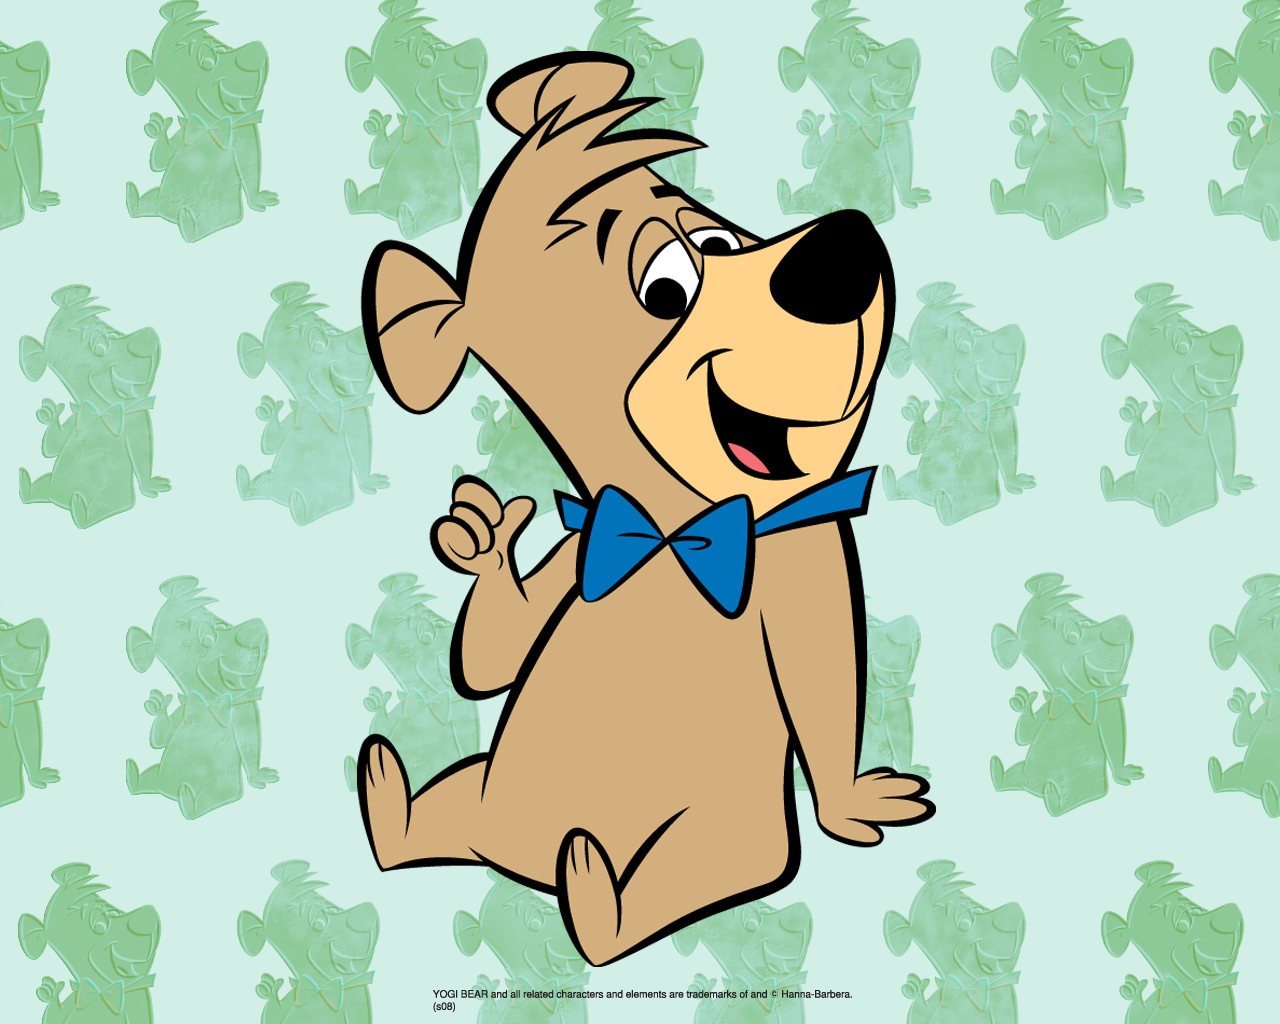 Hanna Barbera - Hanna Barbera Wallpaper (25844228) - Fanpop